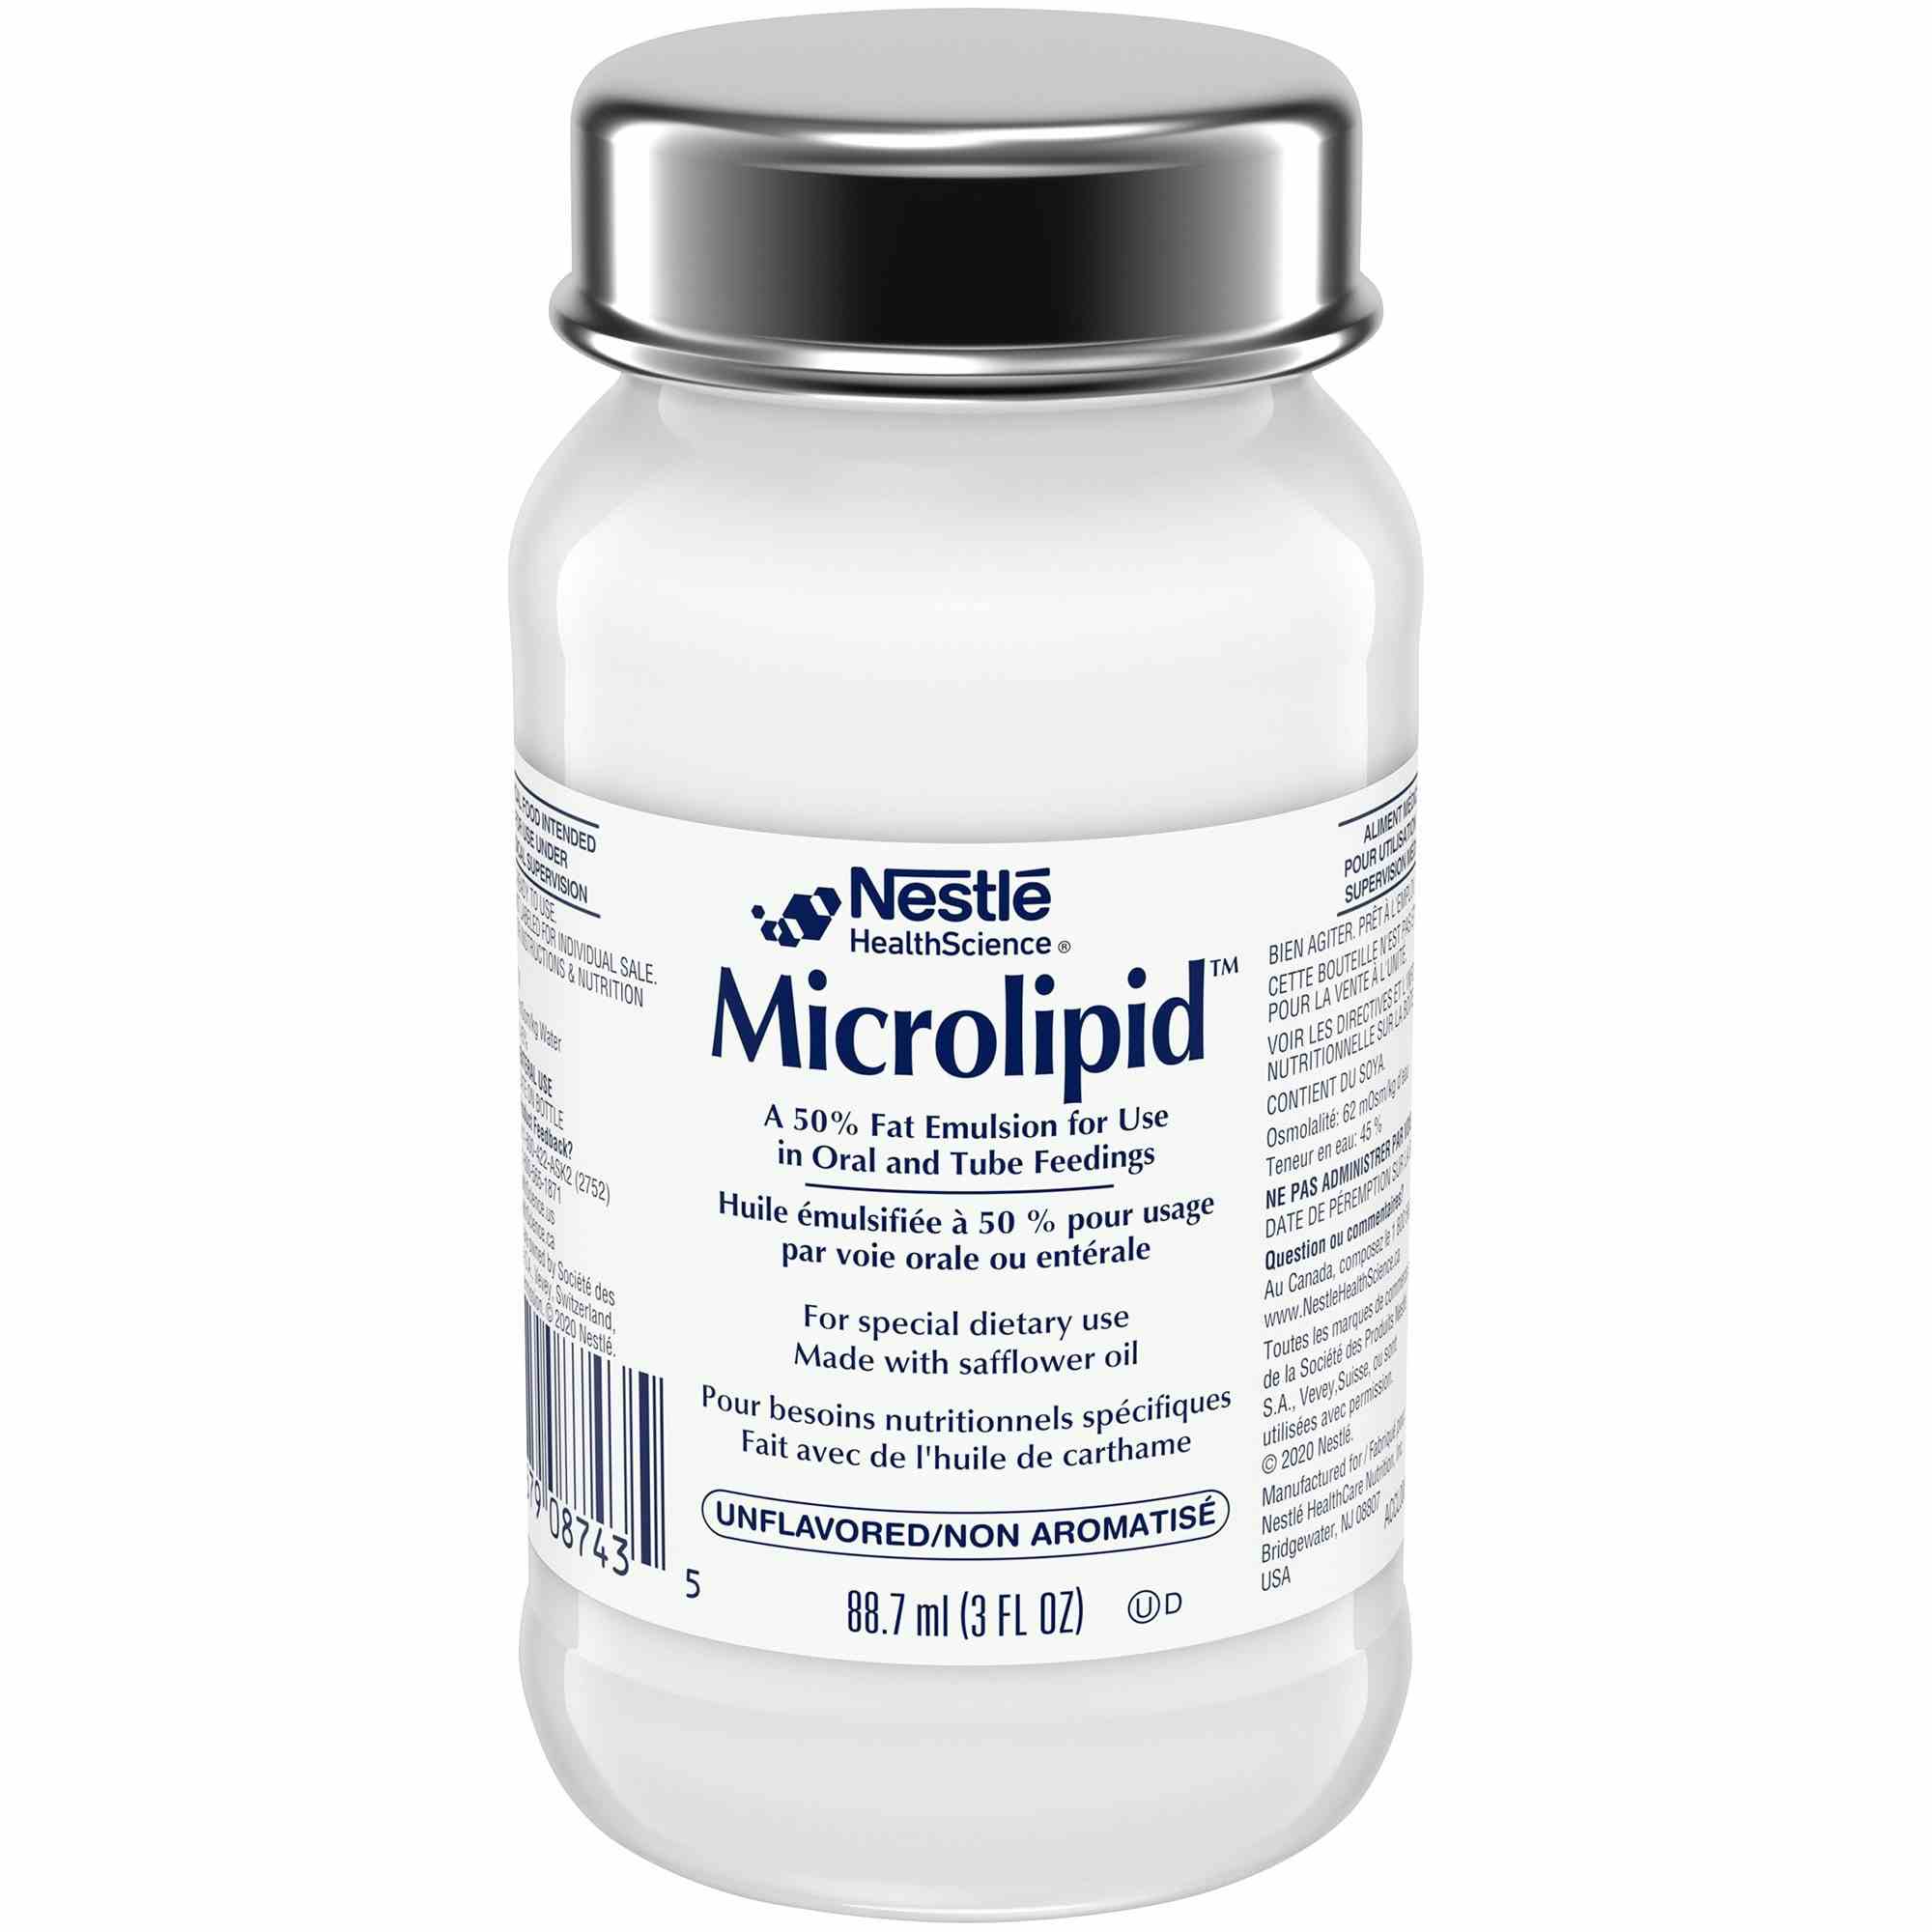 Nestle HealthScience Microlipid, Unflavored, 3 oz., 00041679087022, 1 Bottle